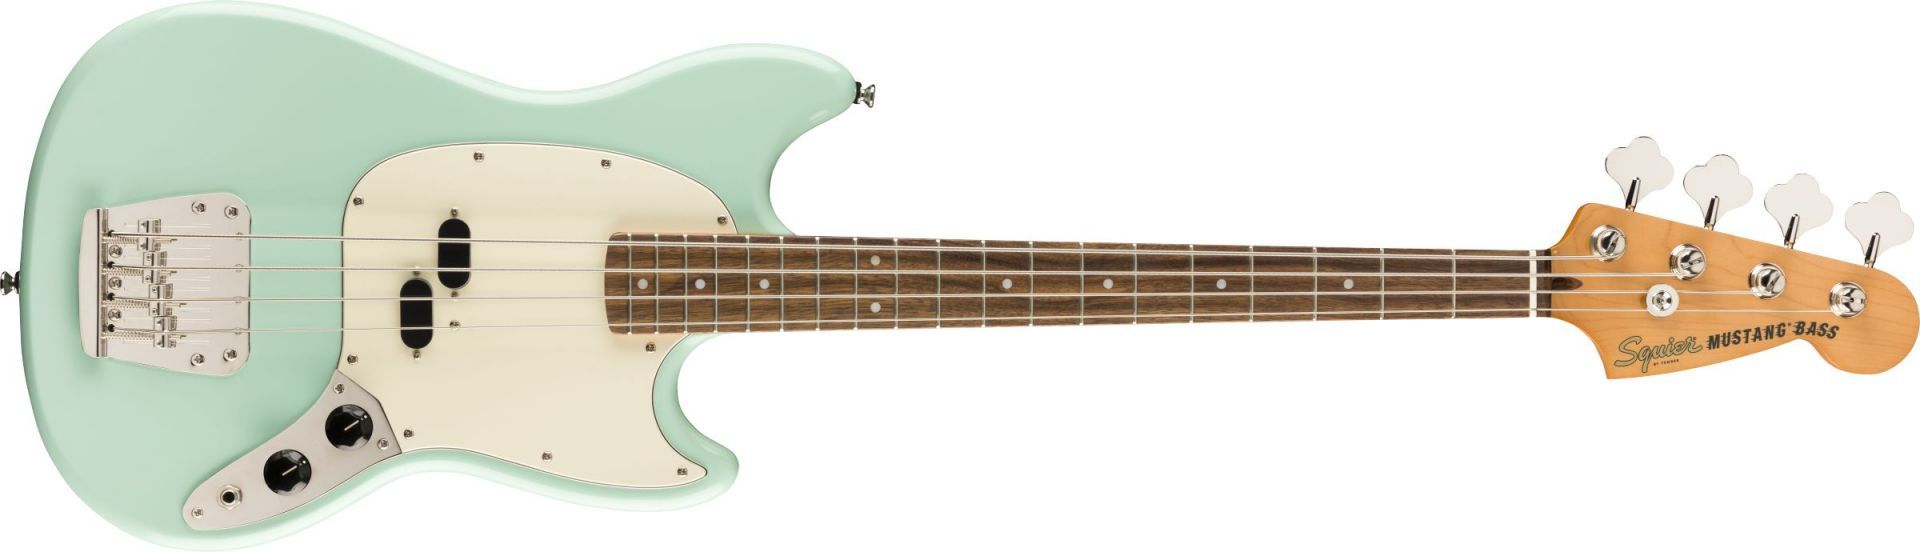 Squier Classic Vibe 60s Mustang Bass Laurel Fingerboard Surf Green